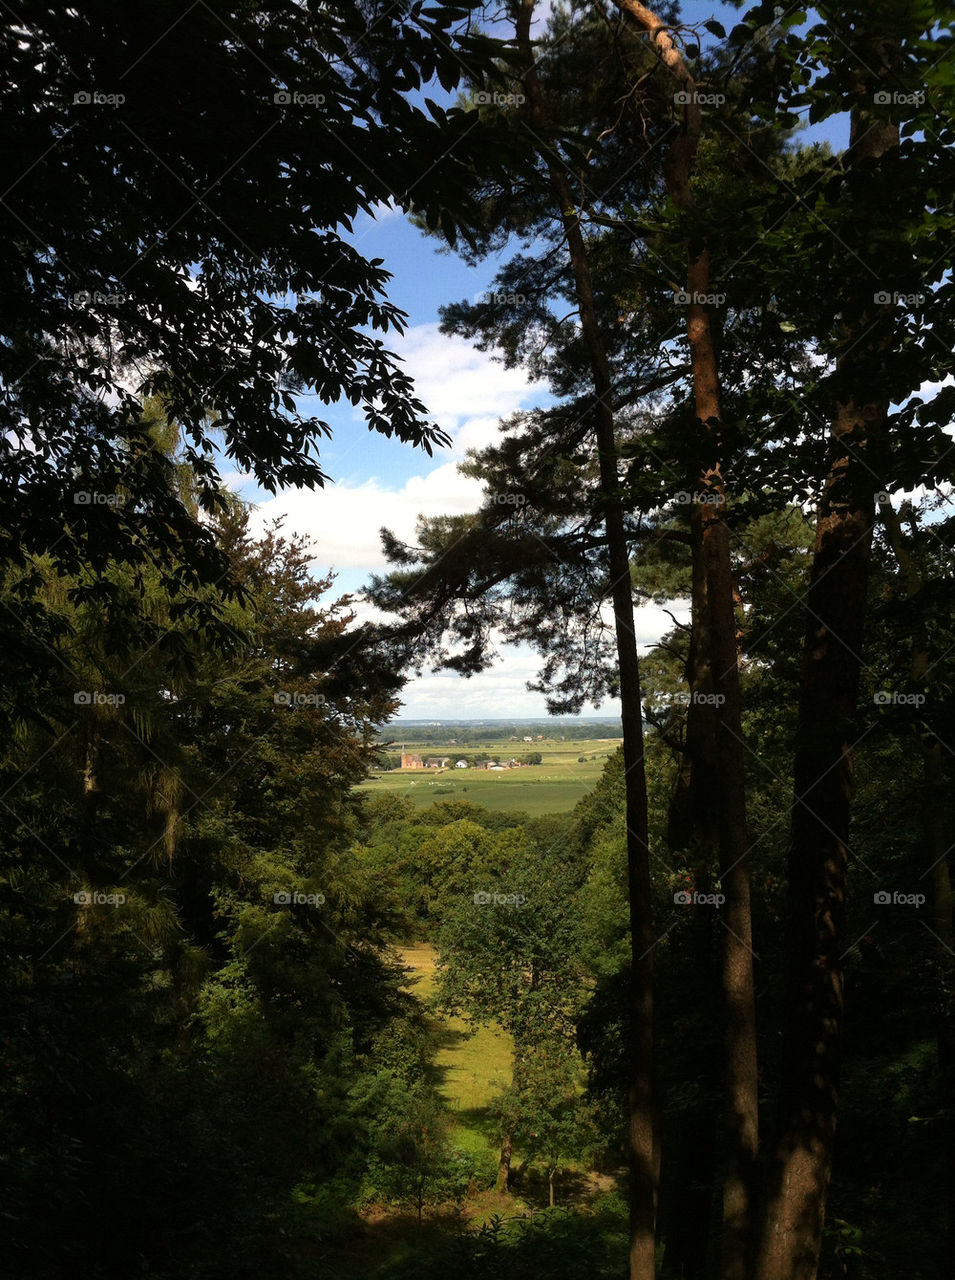 beek nature trees view by Pietorrr